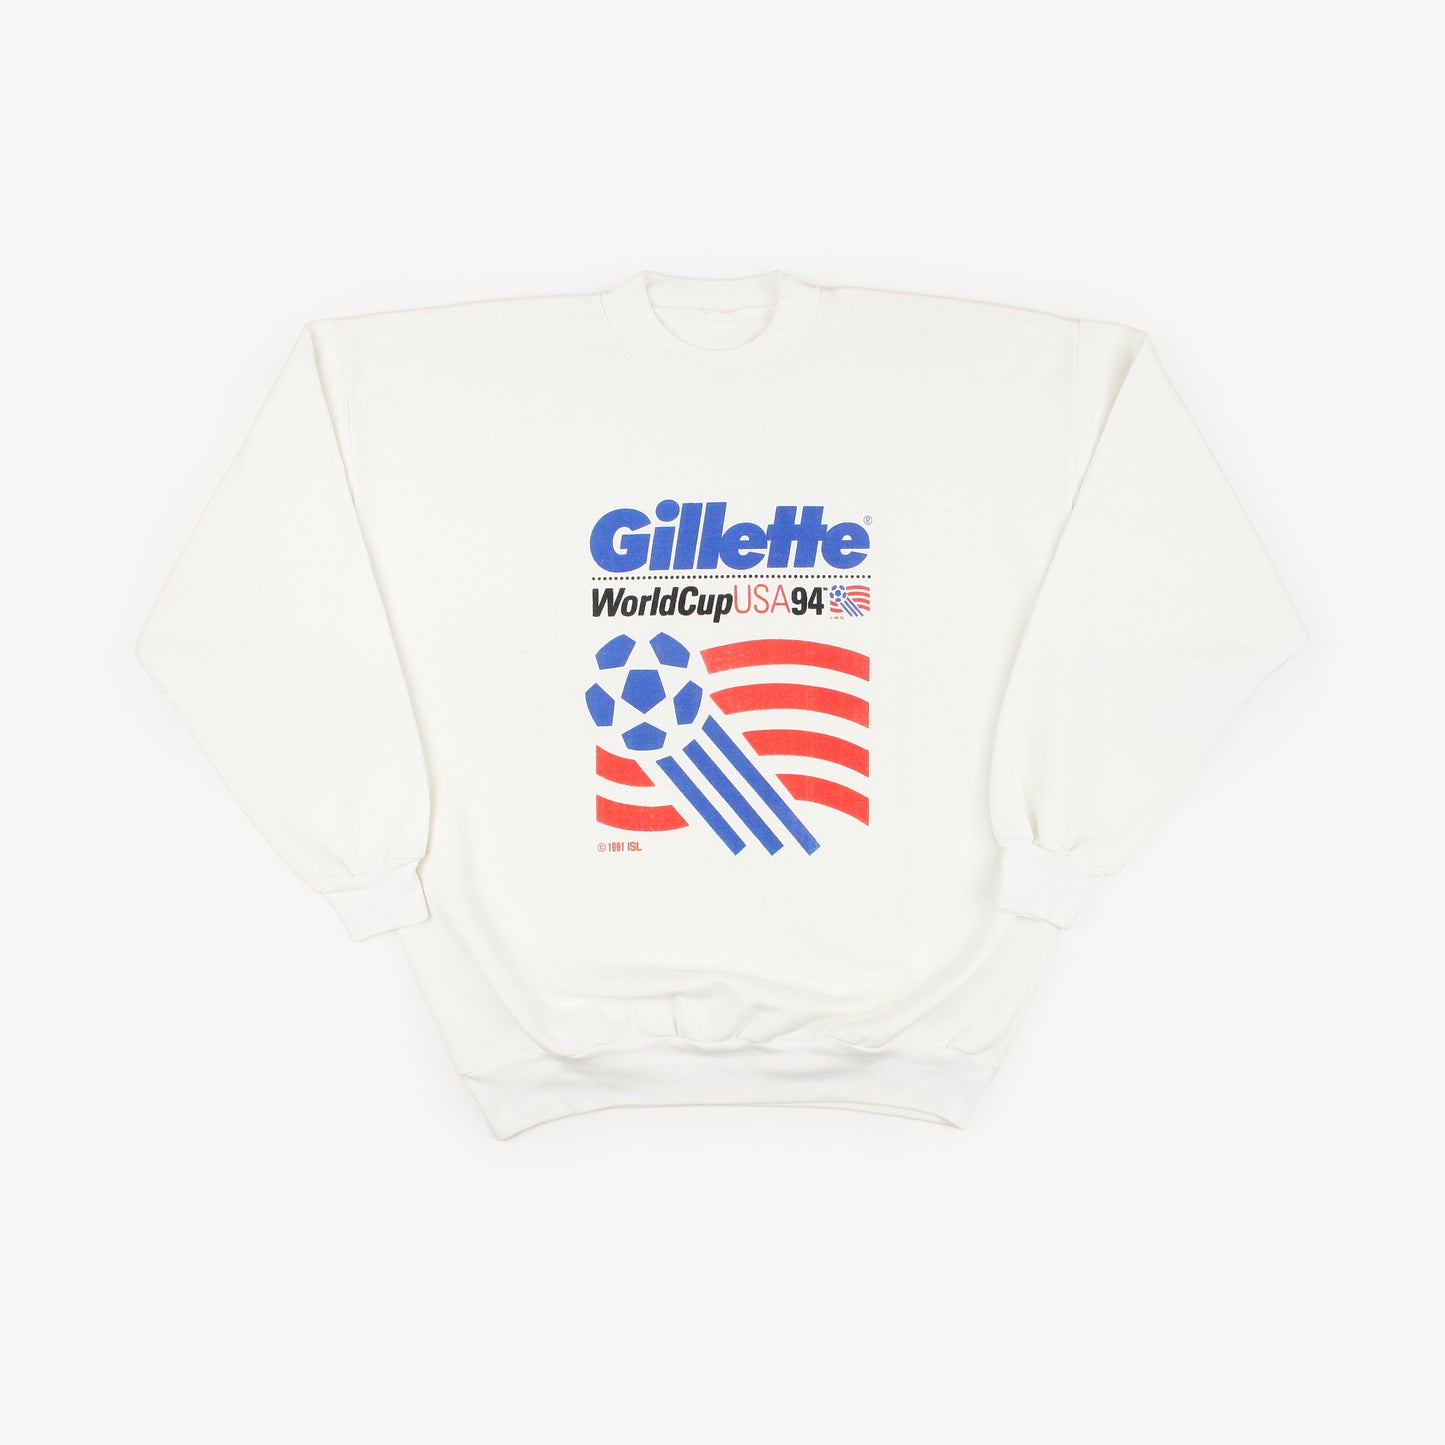 Gillette World Cup USA '94 • Sudadera Promocional • L